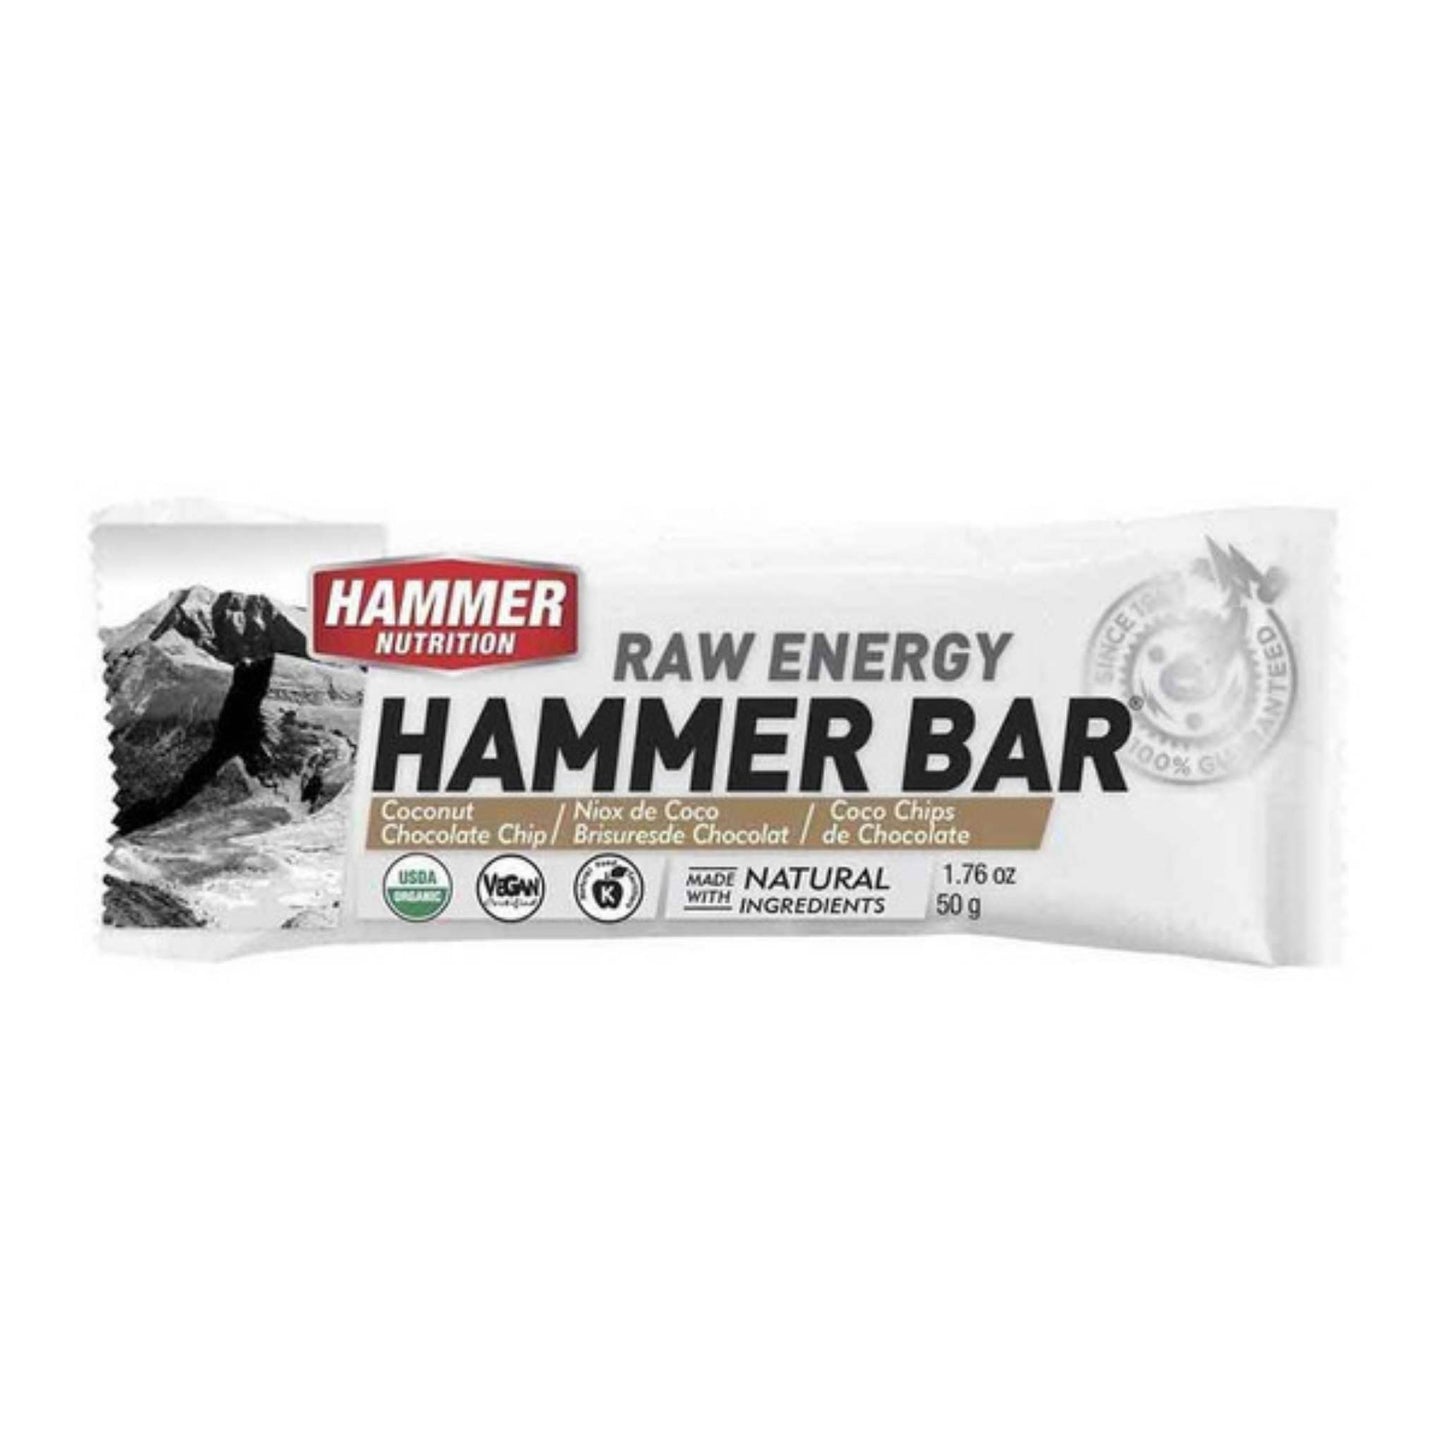 Hammer Nutrition - Raw Energy Food Bar, Single Bar, Coconut Chocolate Chip, Team Perfect